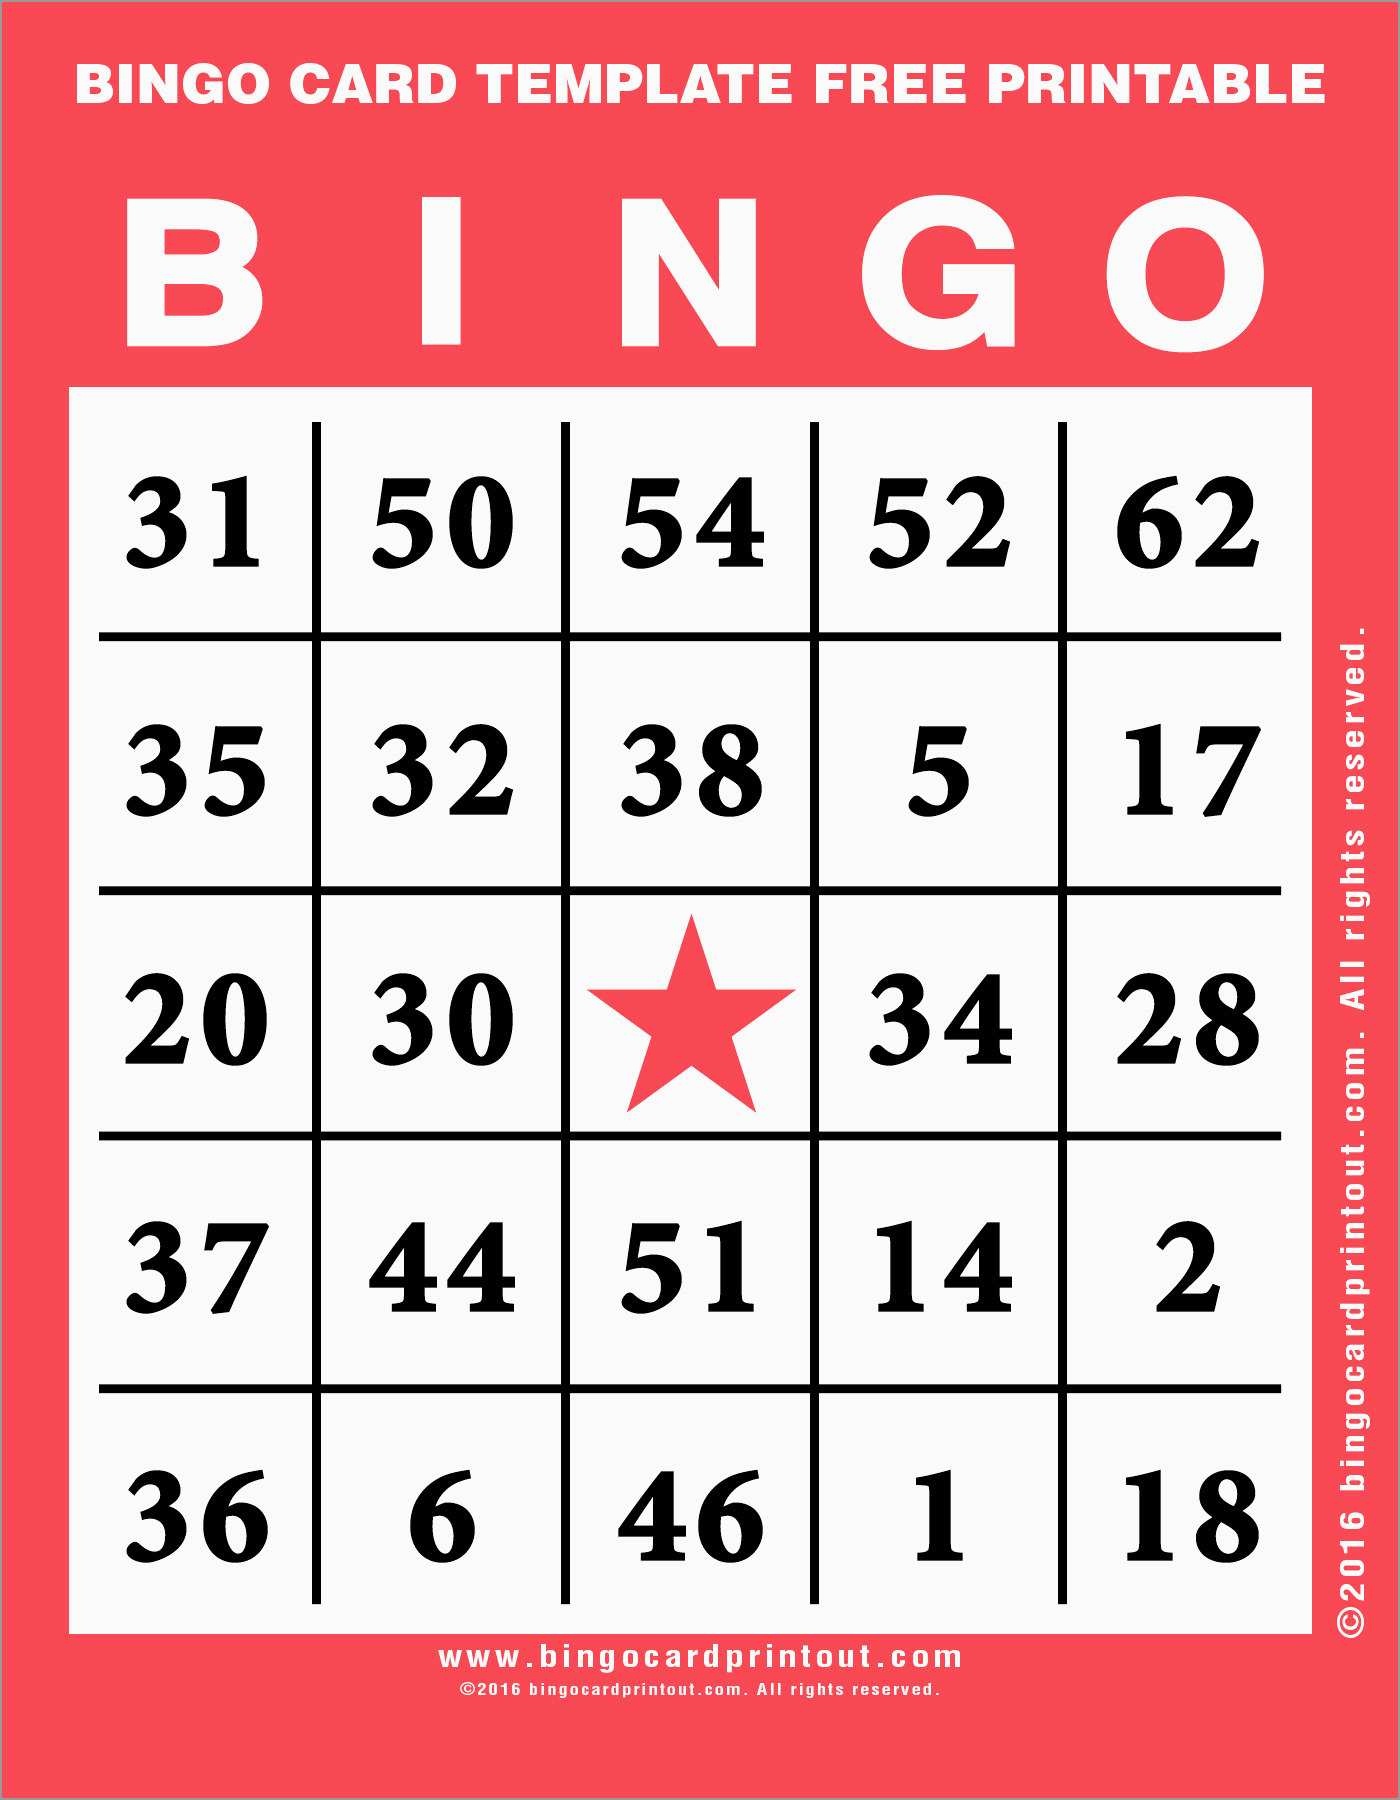 Luxury Bingo Card Template Free | Best Of Template - Free Printable Bingo Cards 1 75